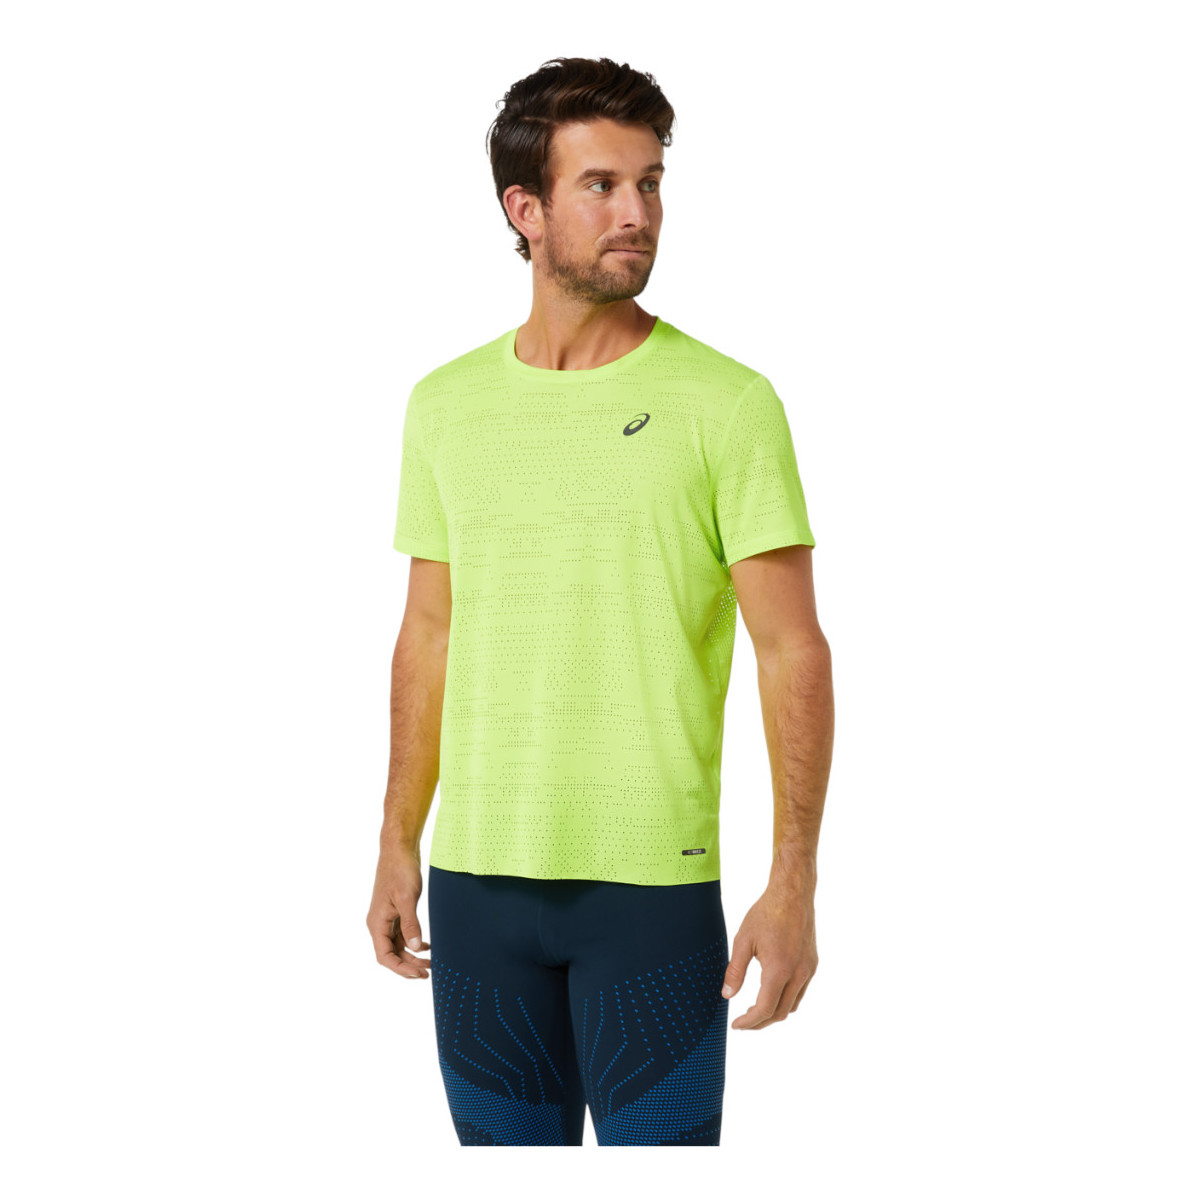 Abbigliamento Uomo T-shirt maniche corte Asics Ventilate Actibreeze Short Sleeve Verde